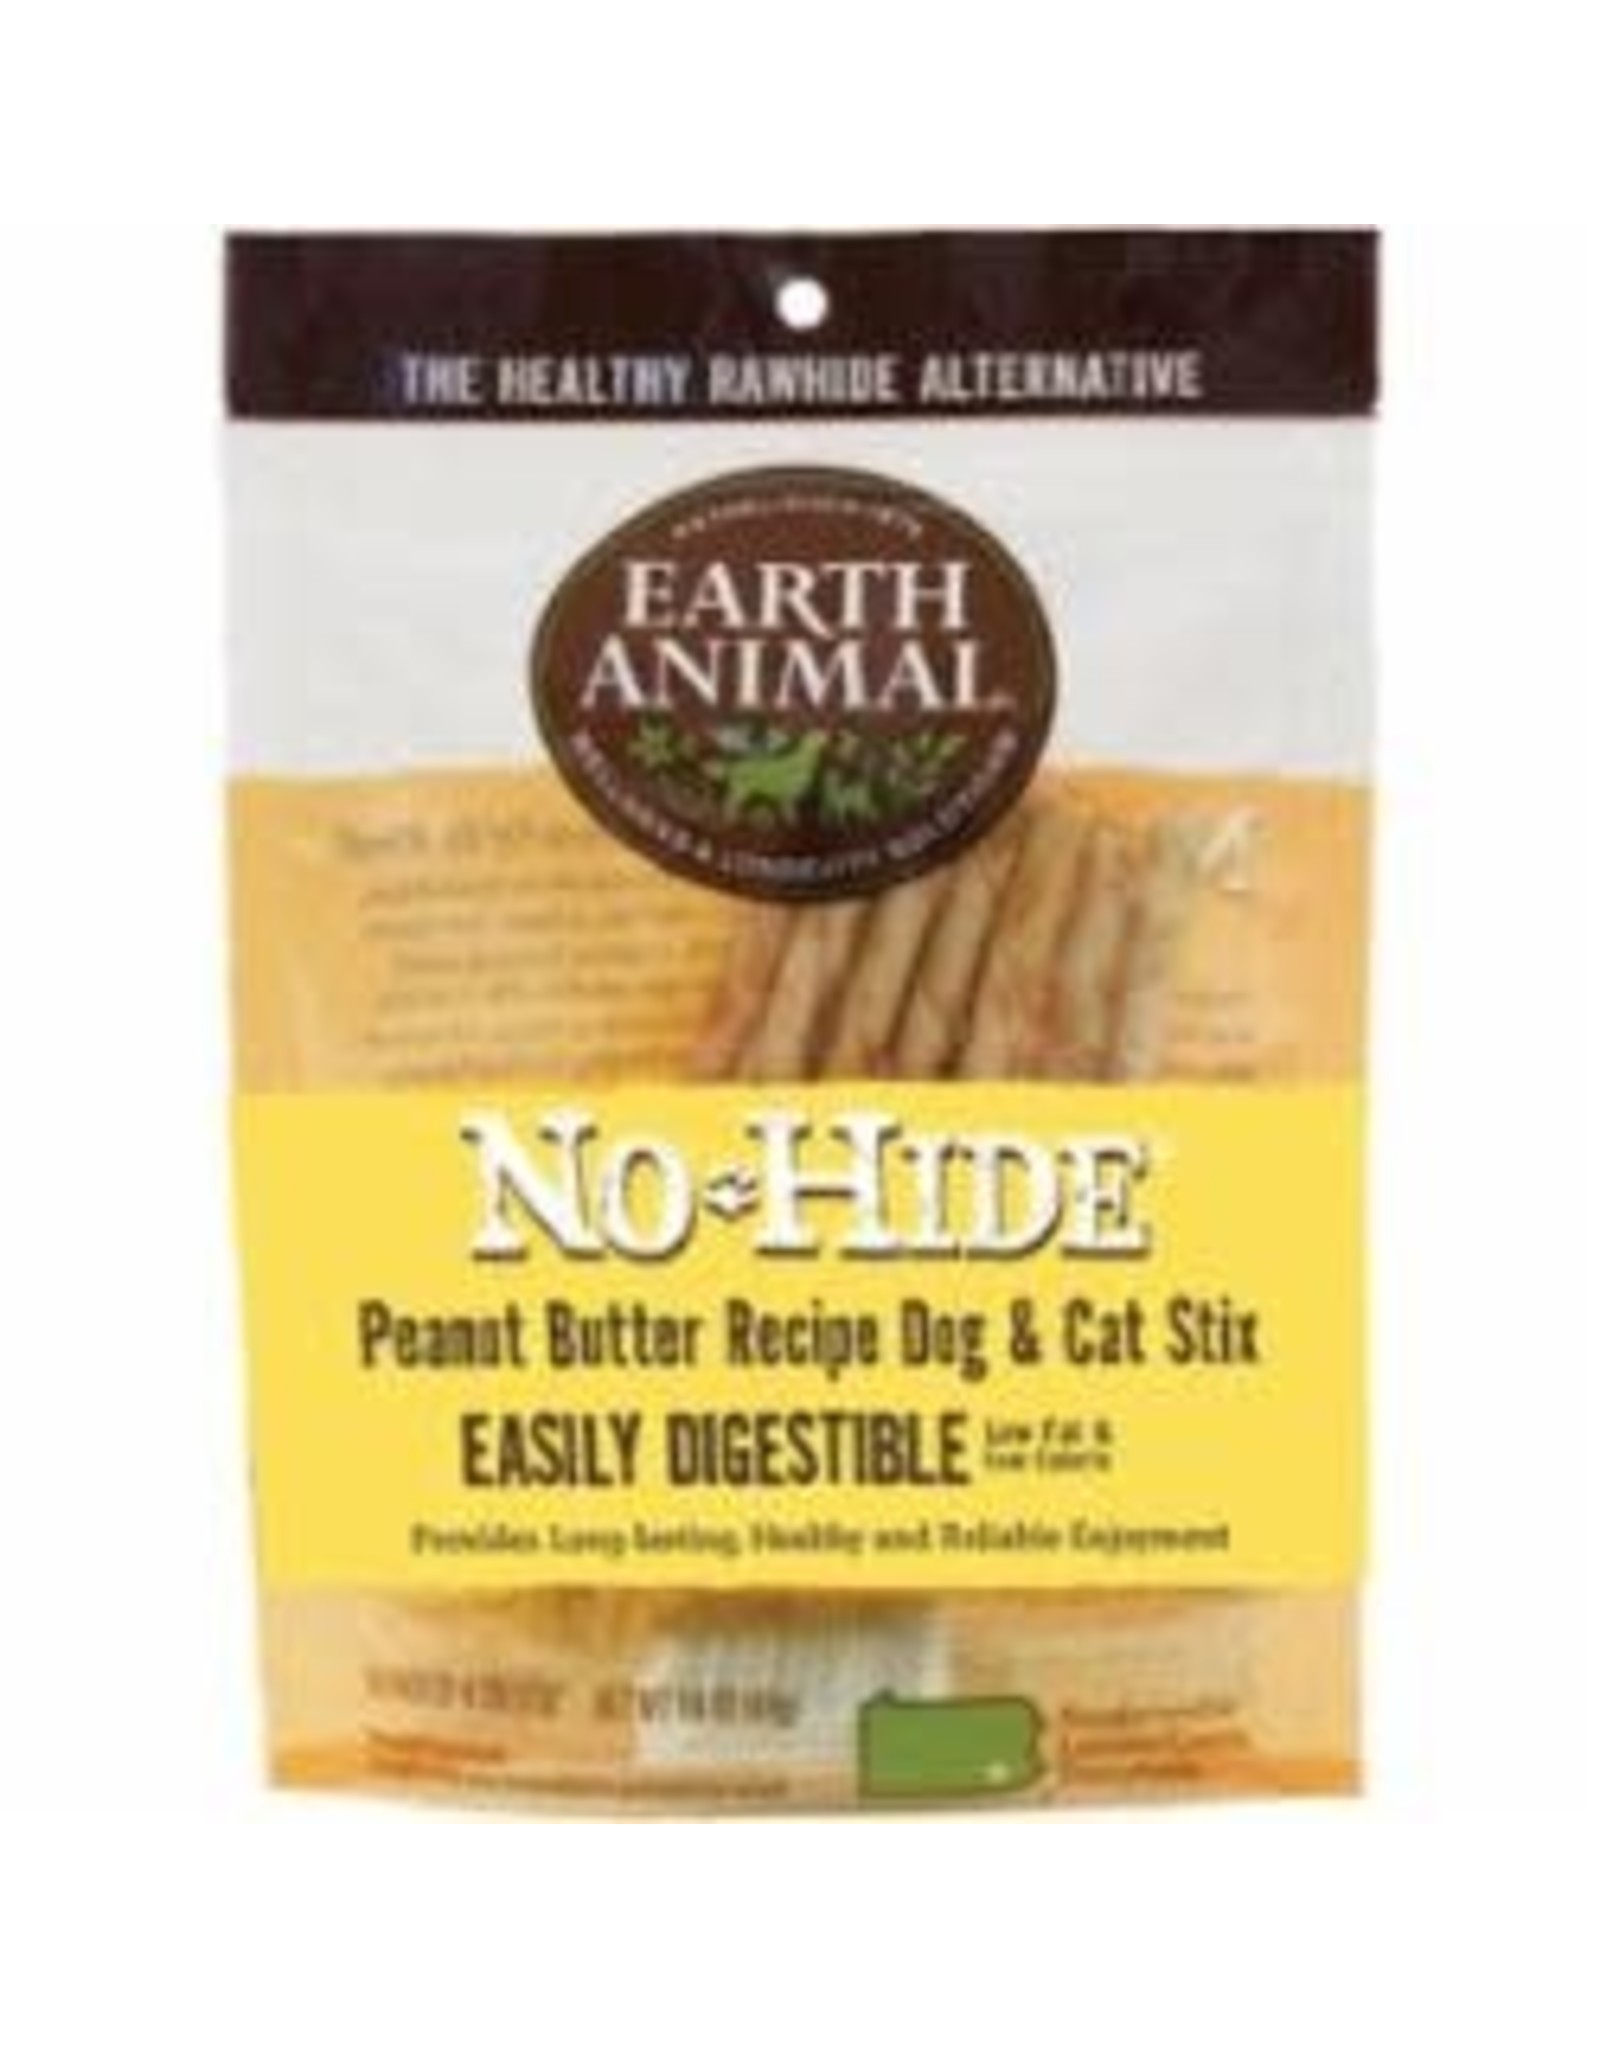 Earth Animal Earth Animal No-Hide Roll Peanut Butter Recipe